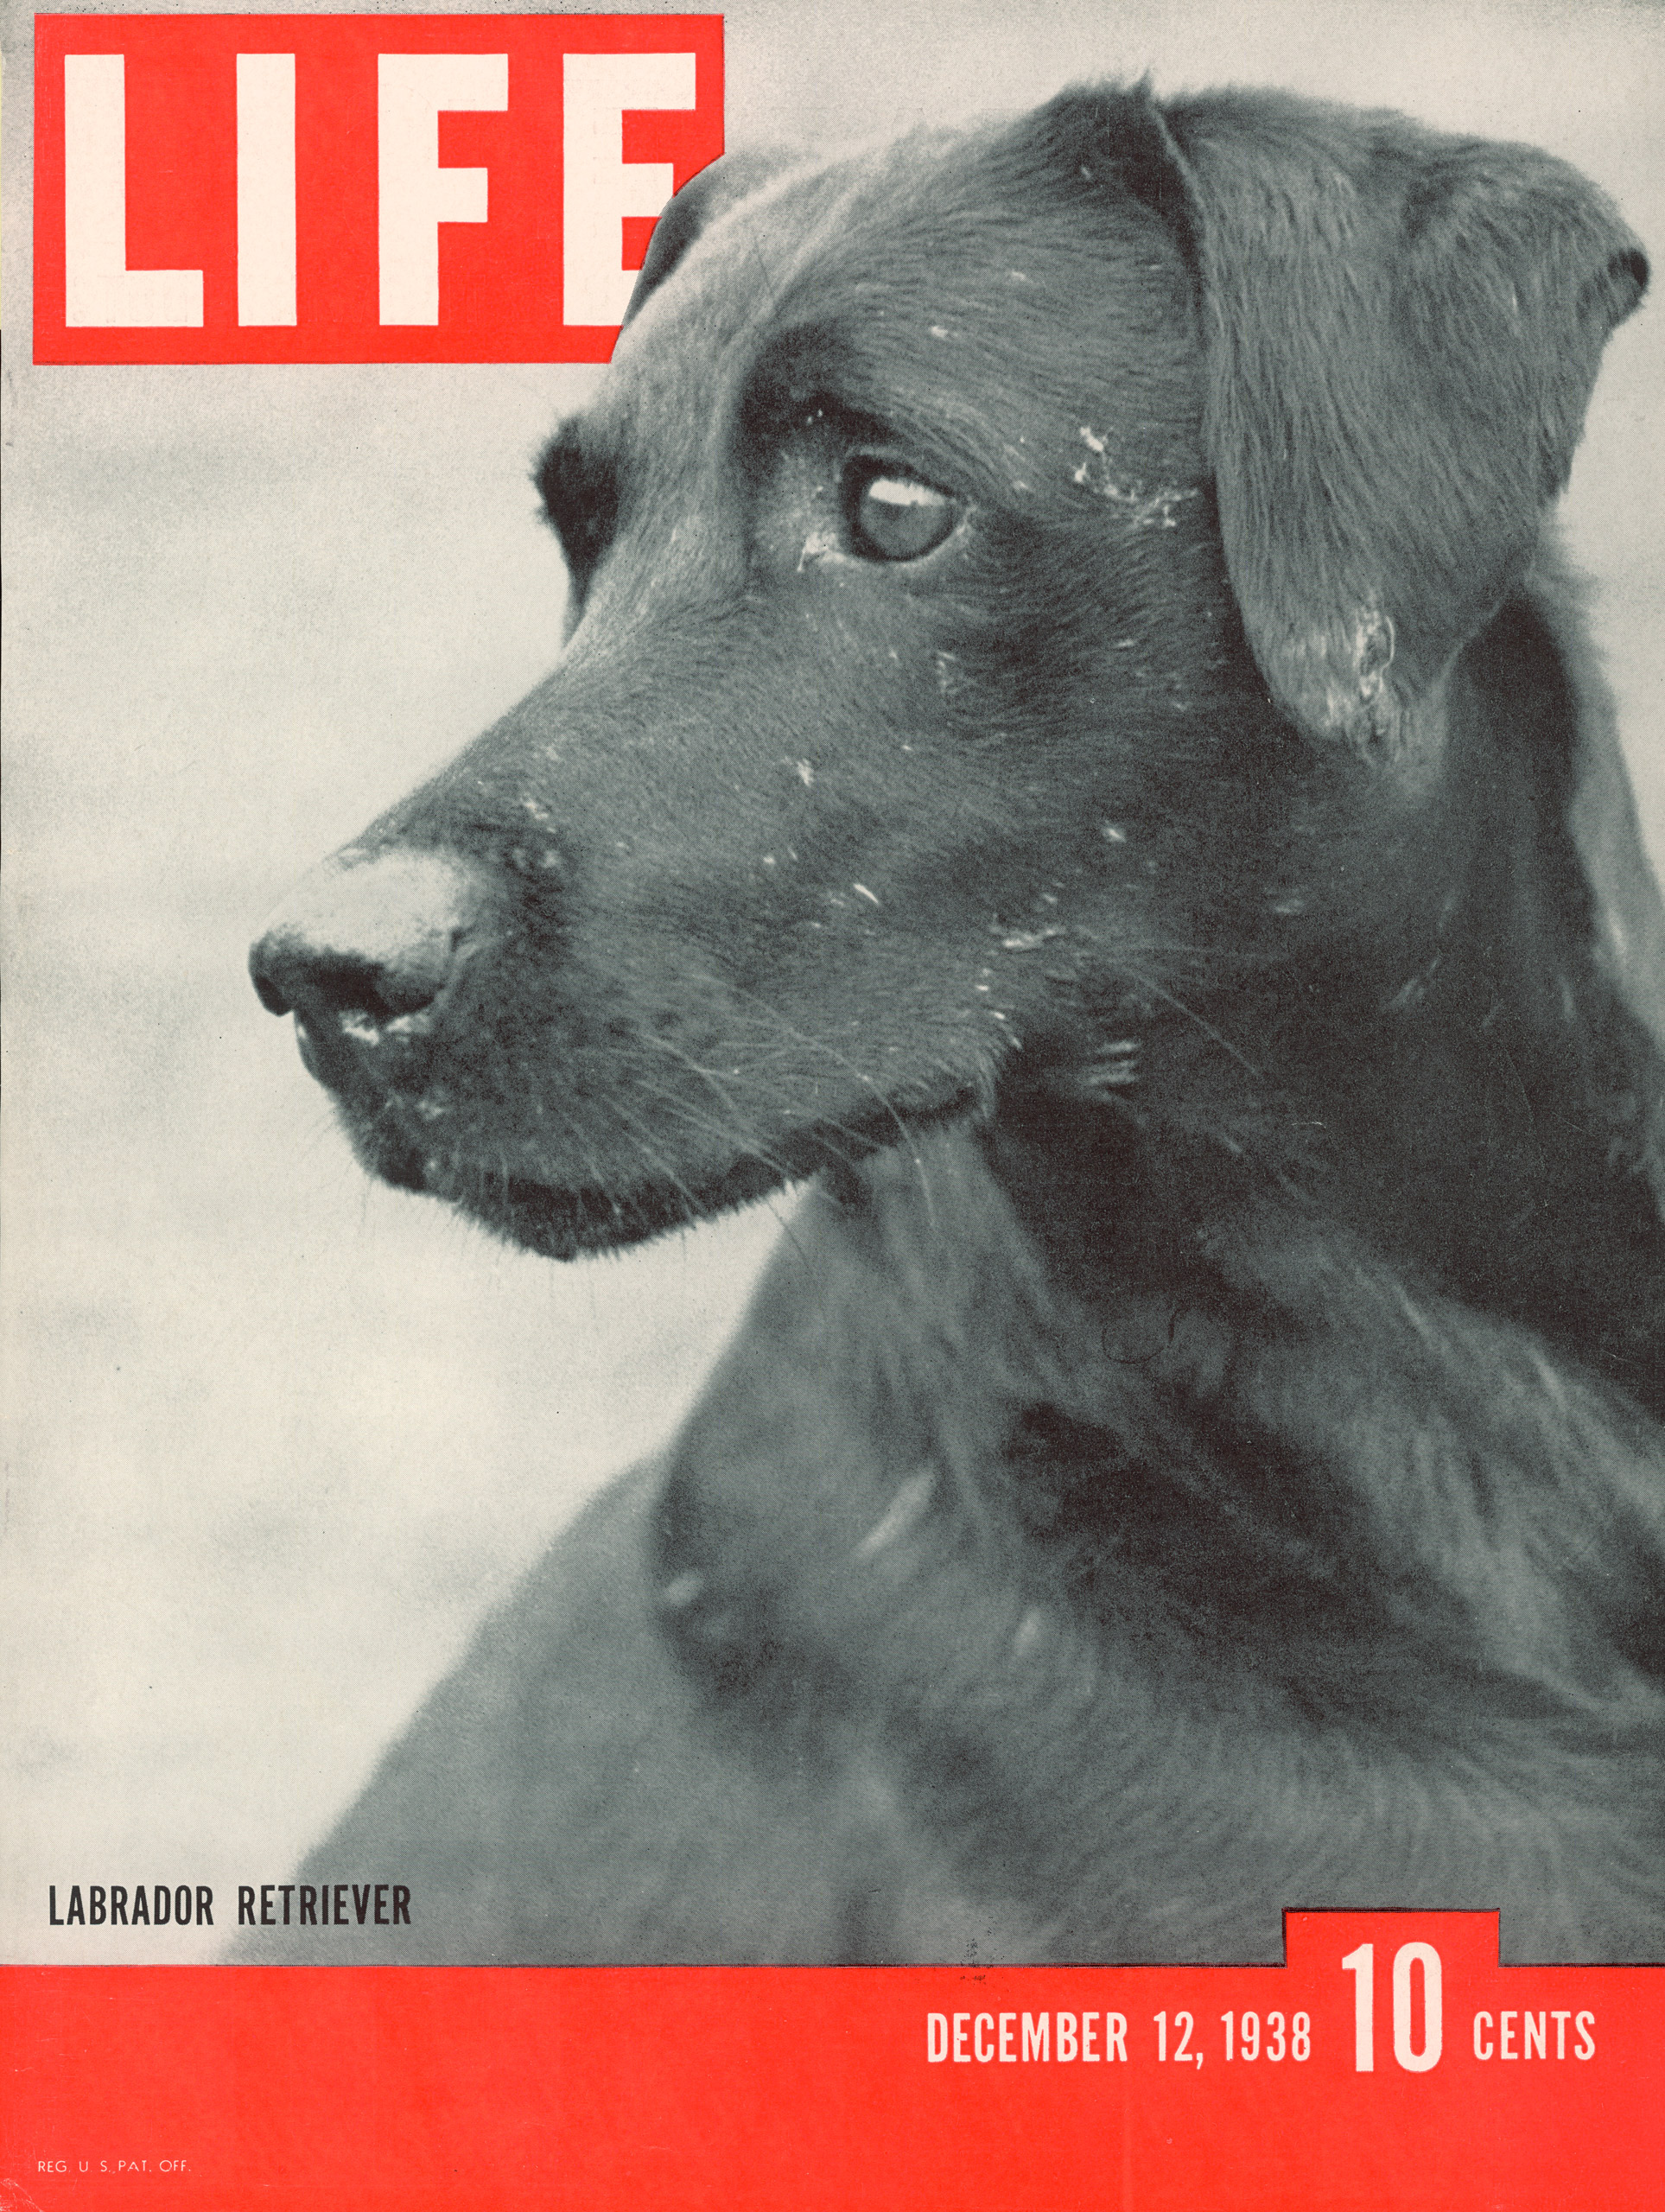 December 12, 1938 LIFE Magazine cover